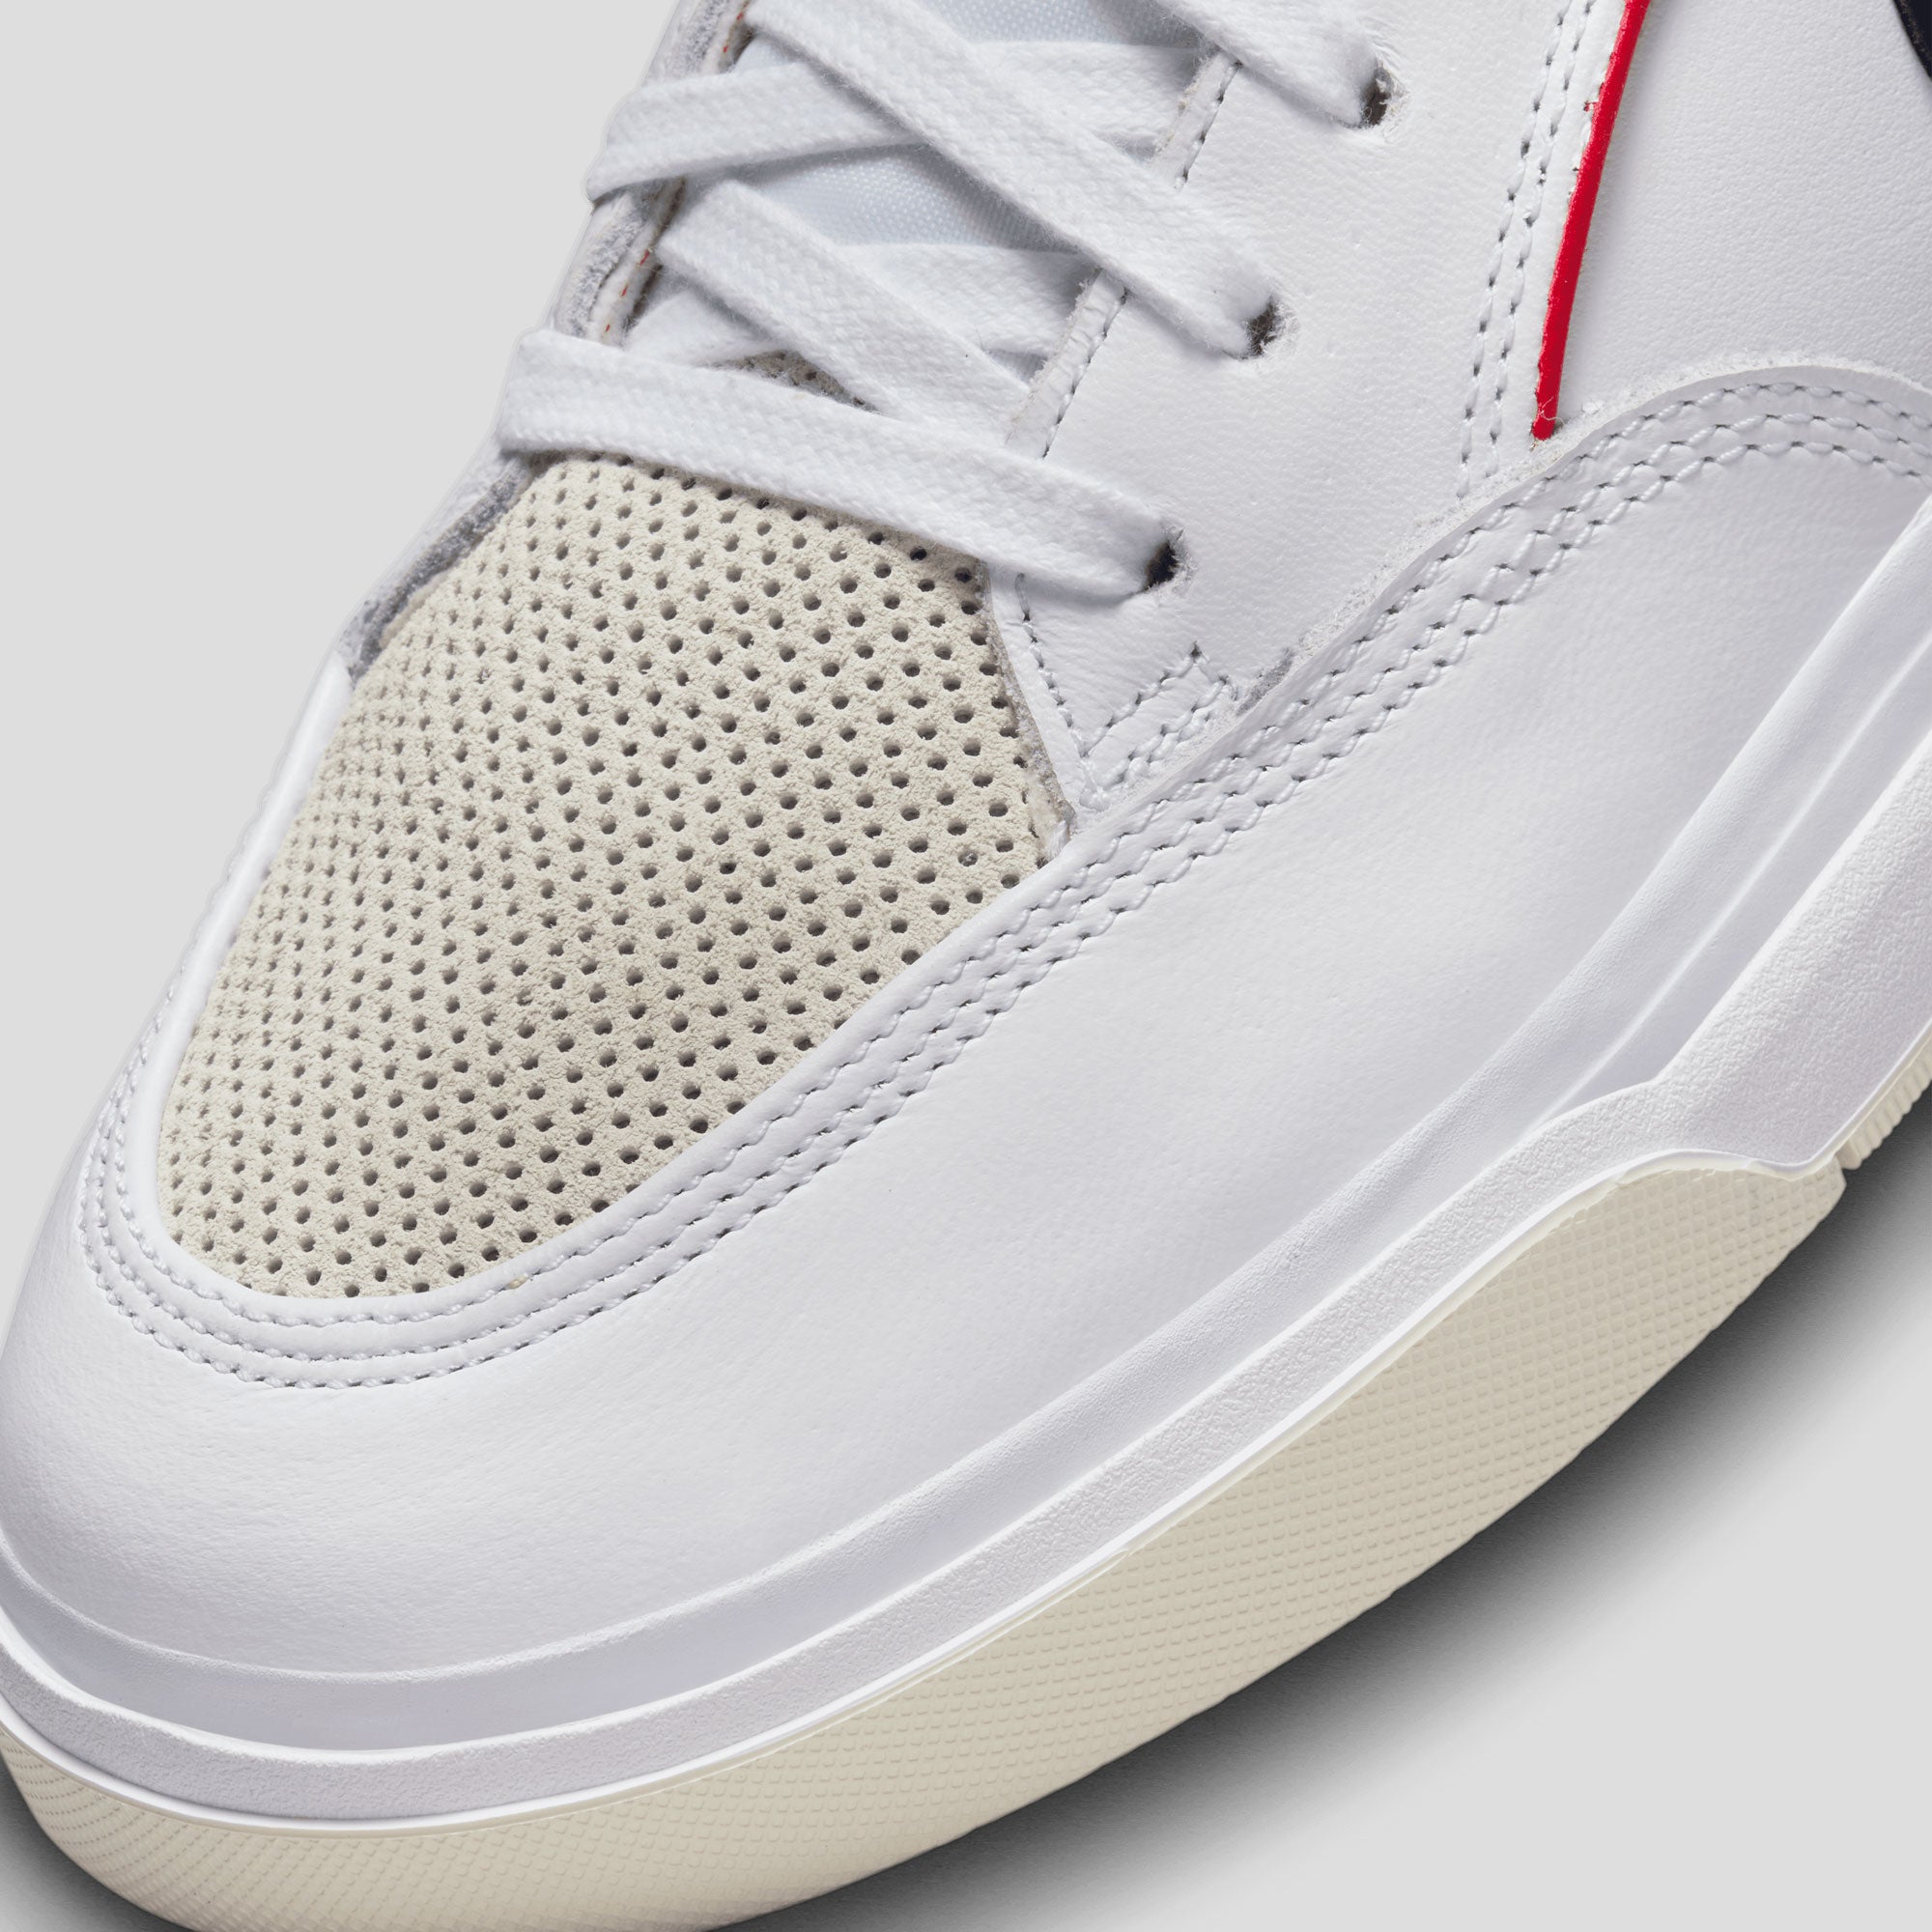 Nike SB React Leo Premium - White / University Red / Midnight Navy